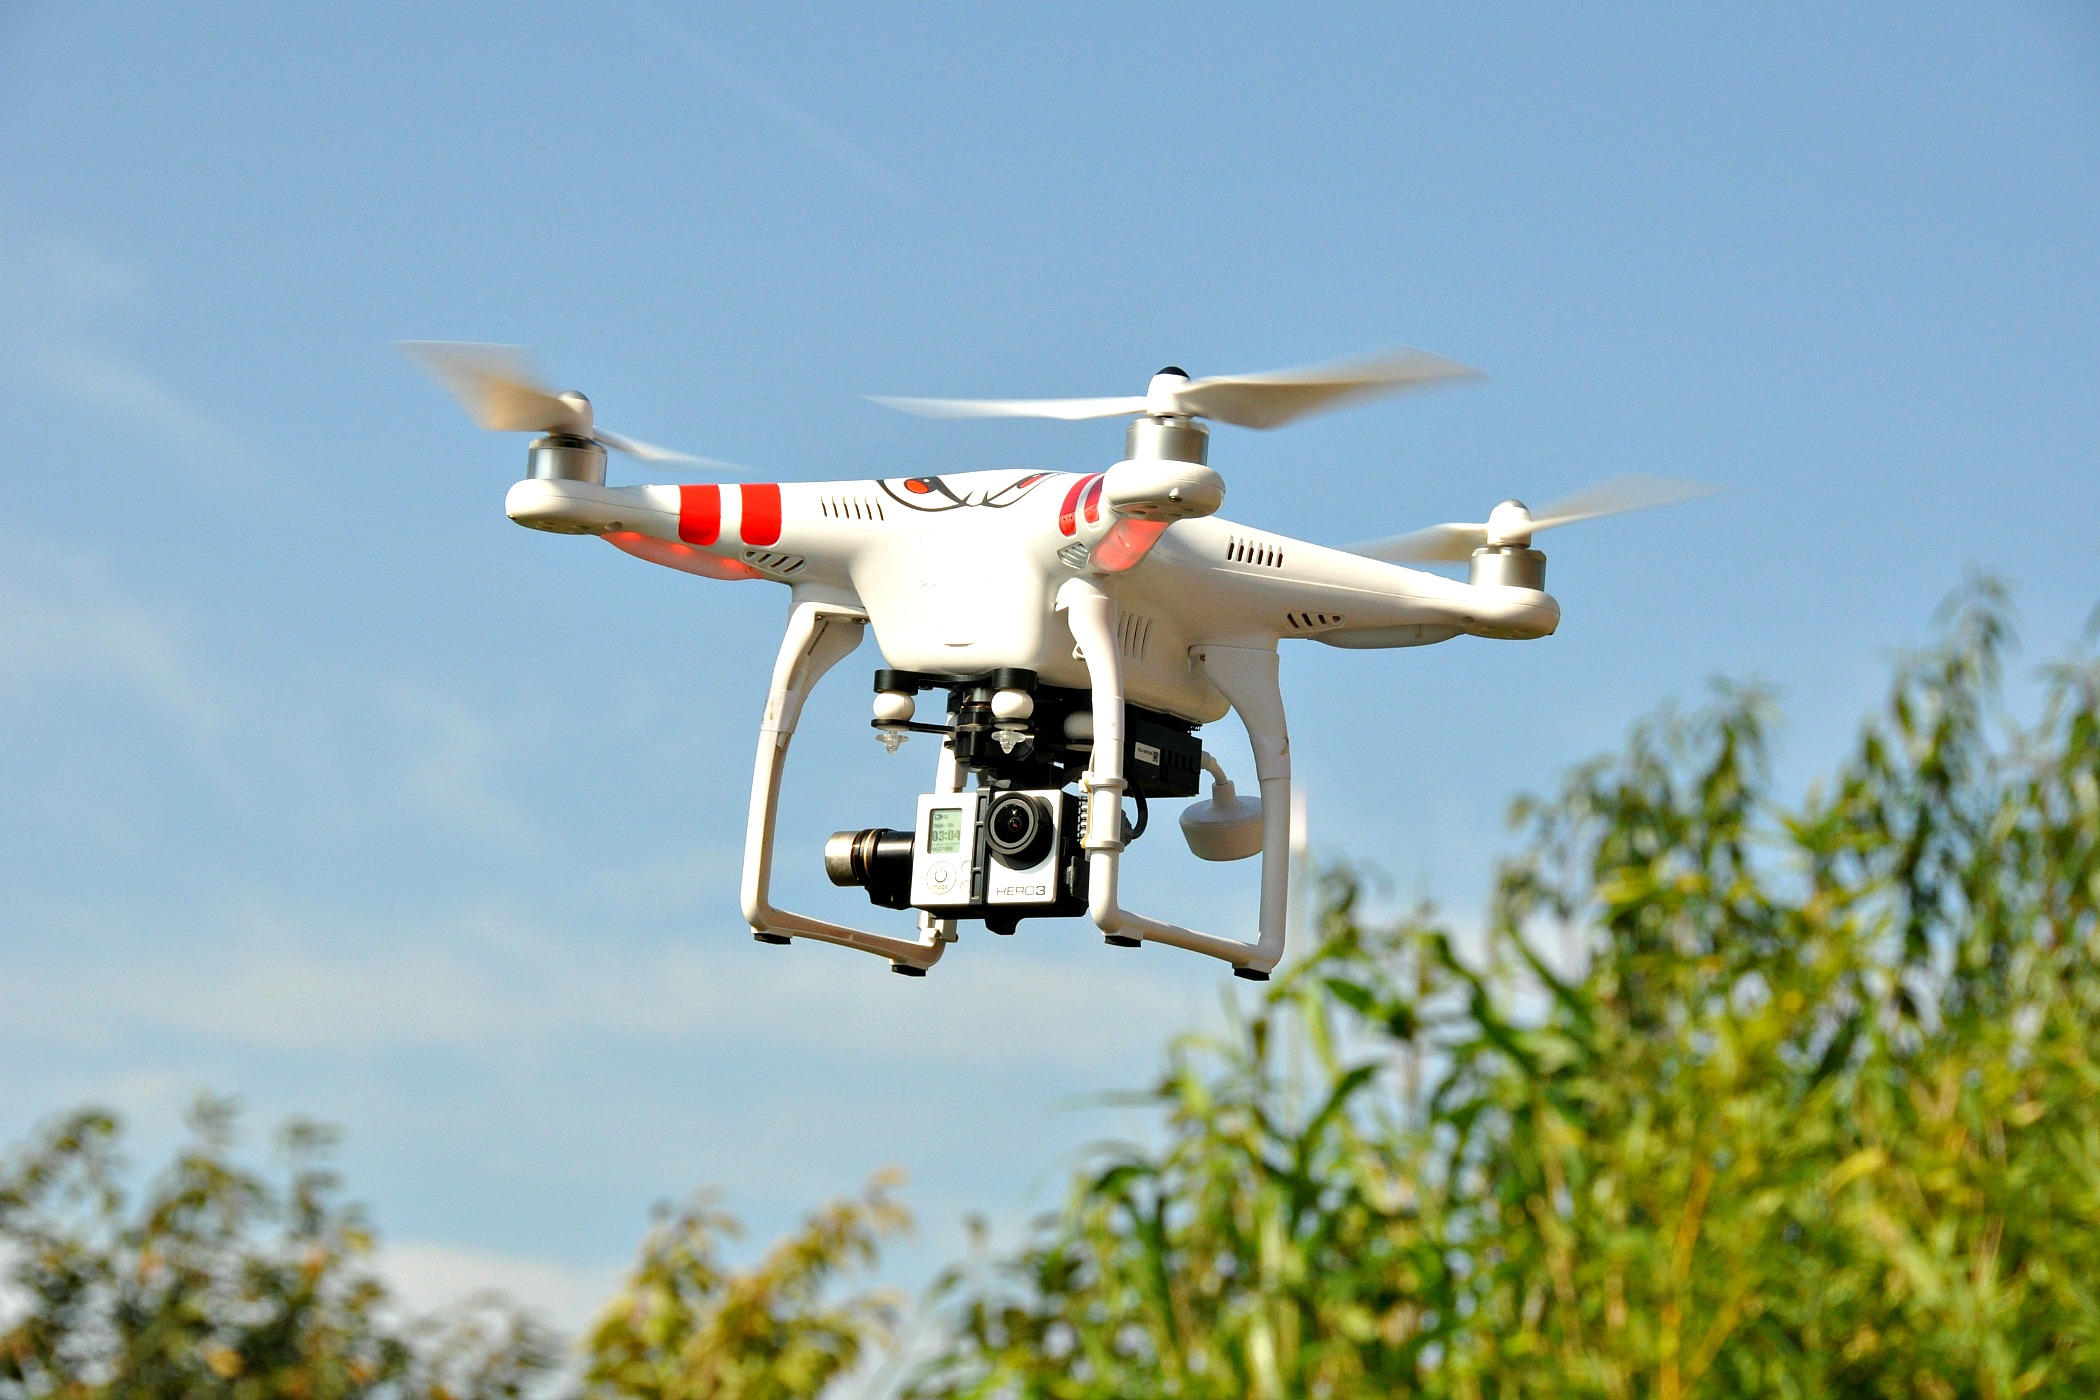 drone vliegen nederland regels wet verboden luchtruimte boete celstraf parrot phantom